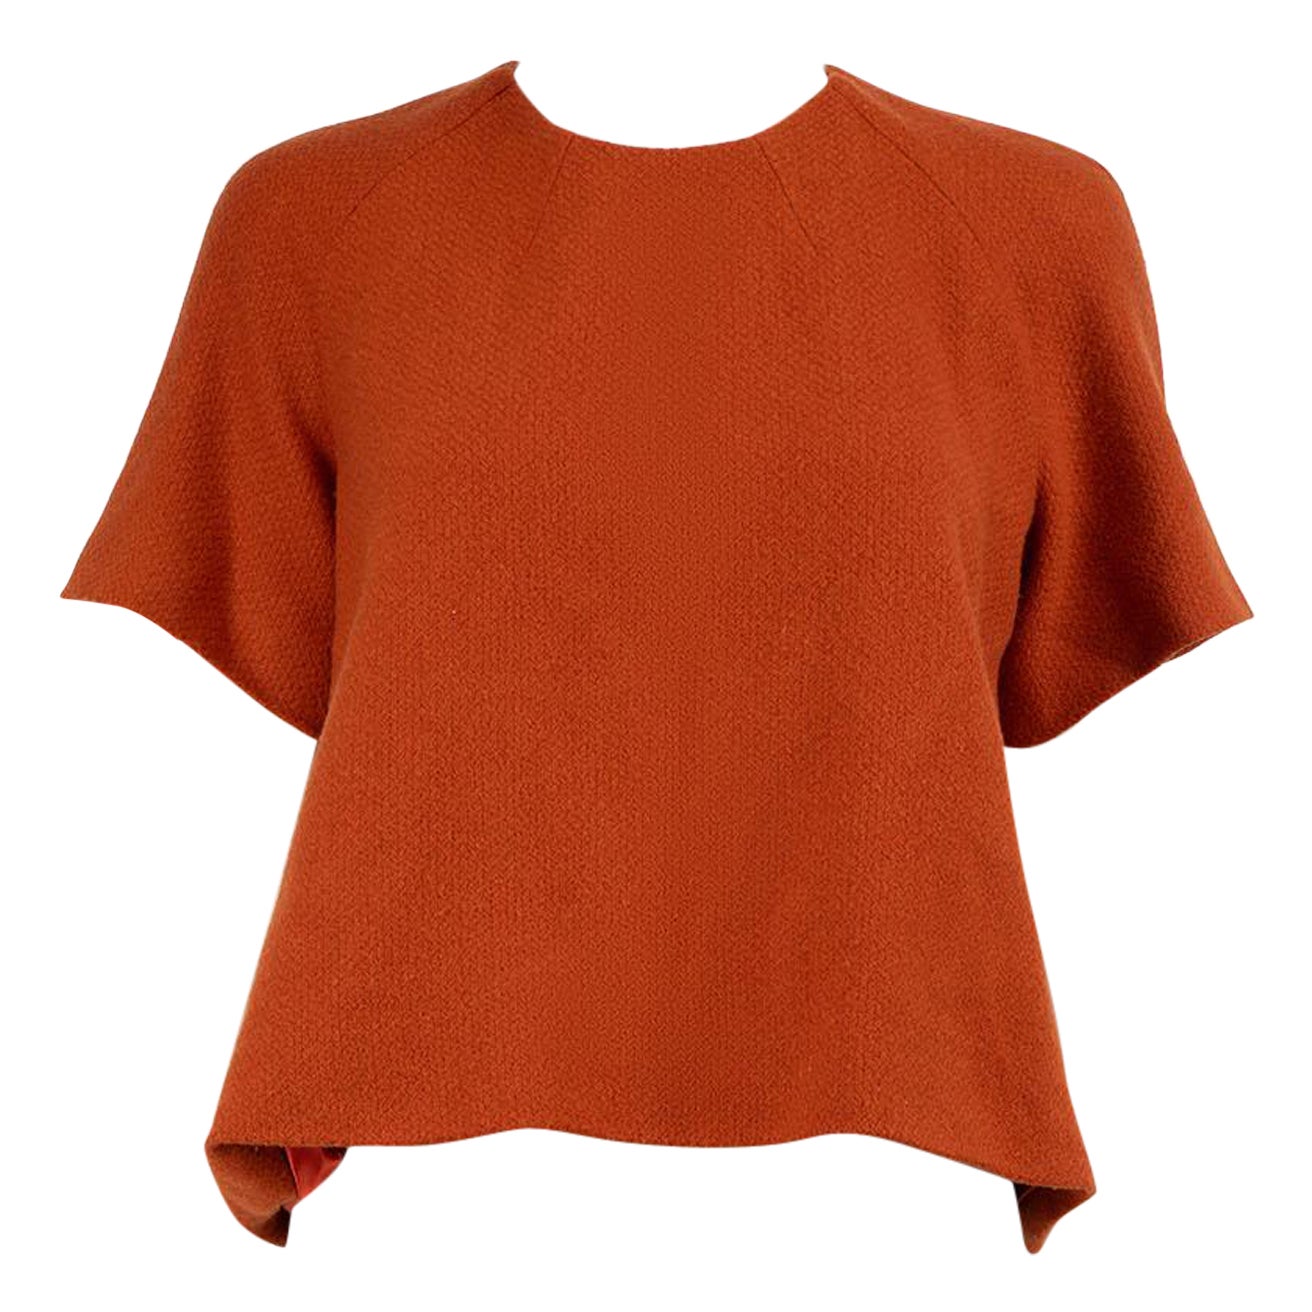 Emilia Wickstead Orange Wool Round Neck Top Size L For Sale